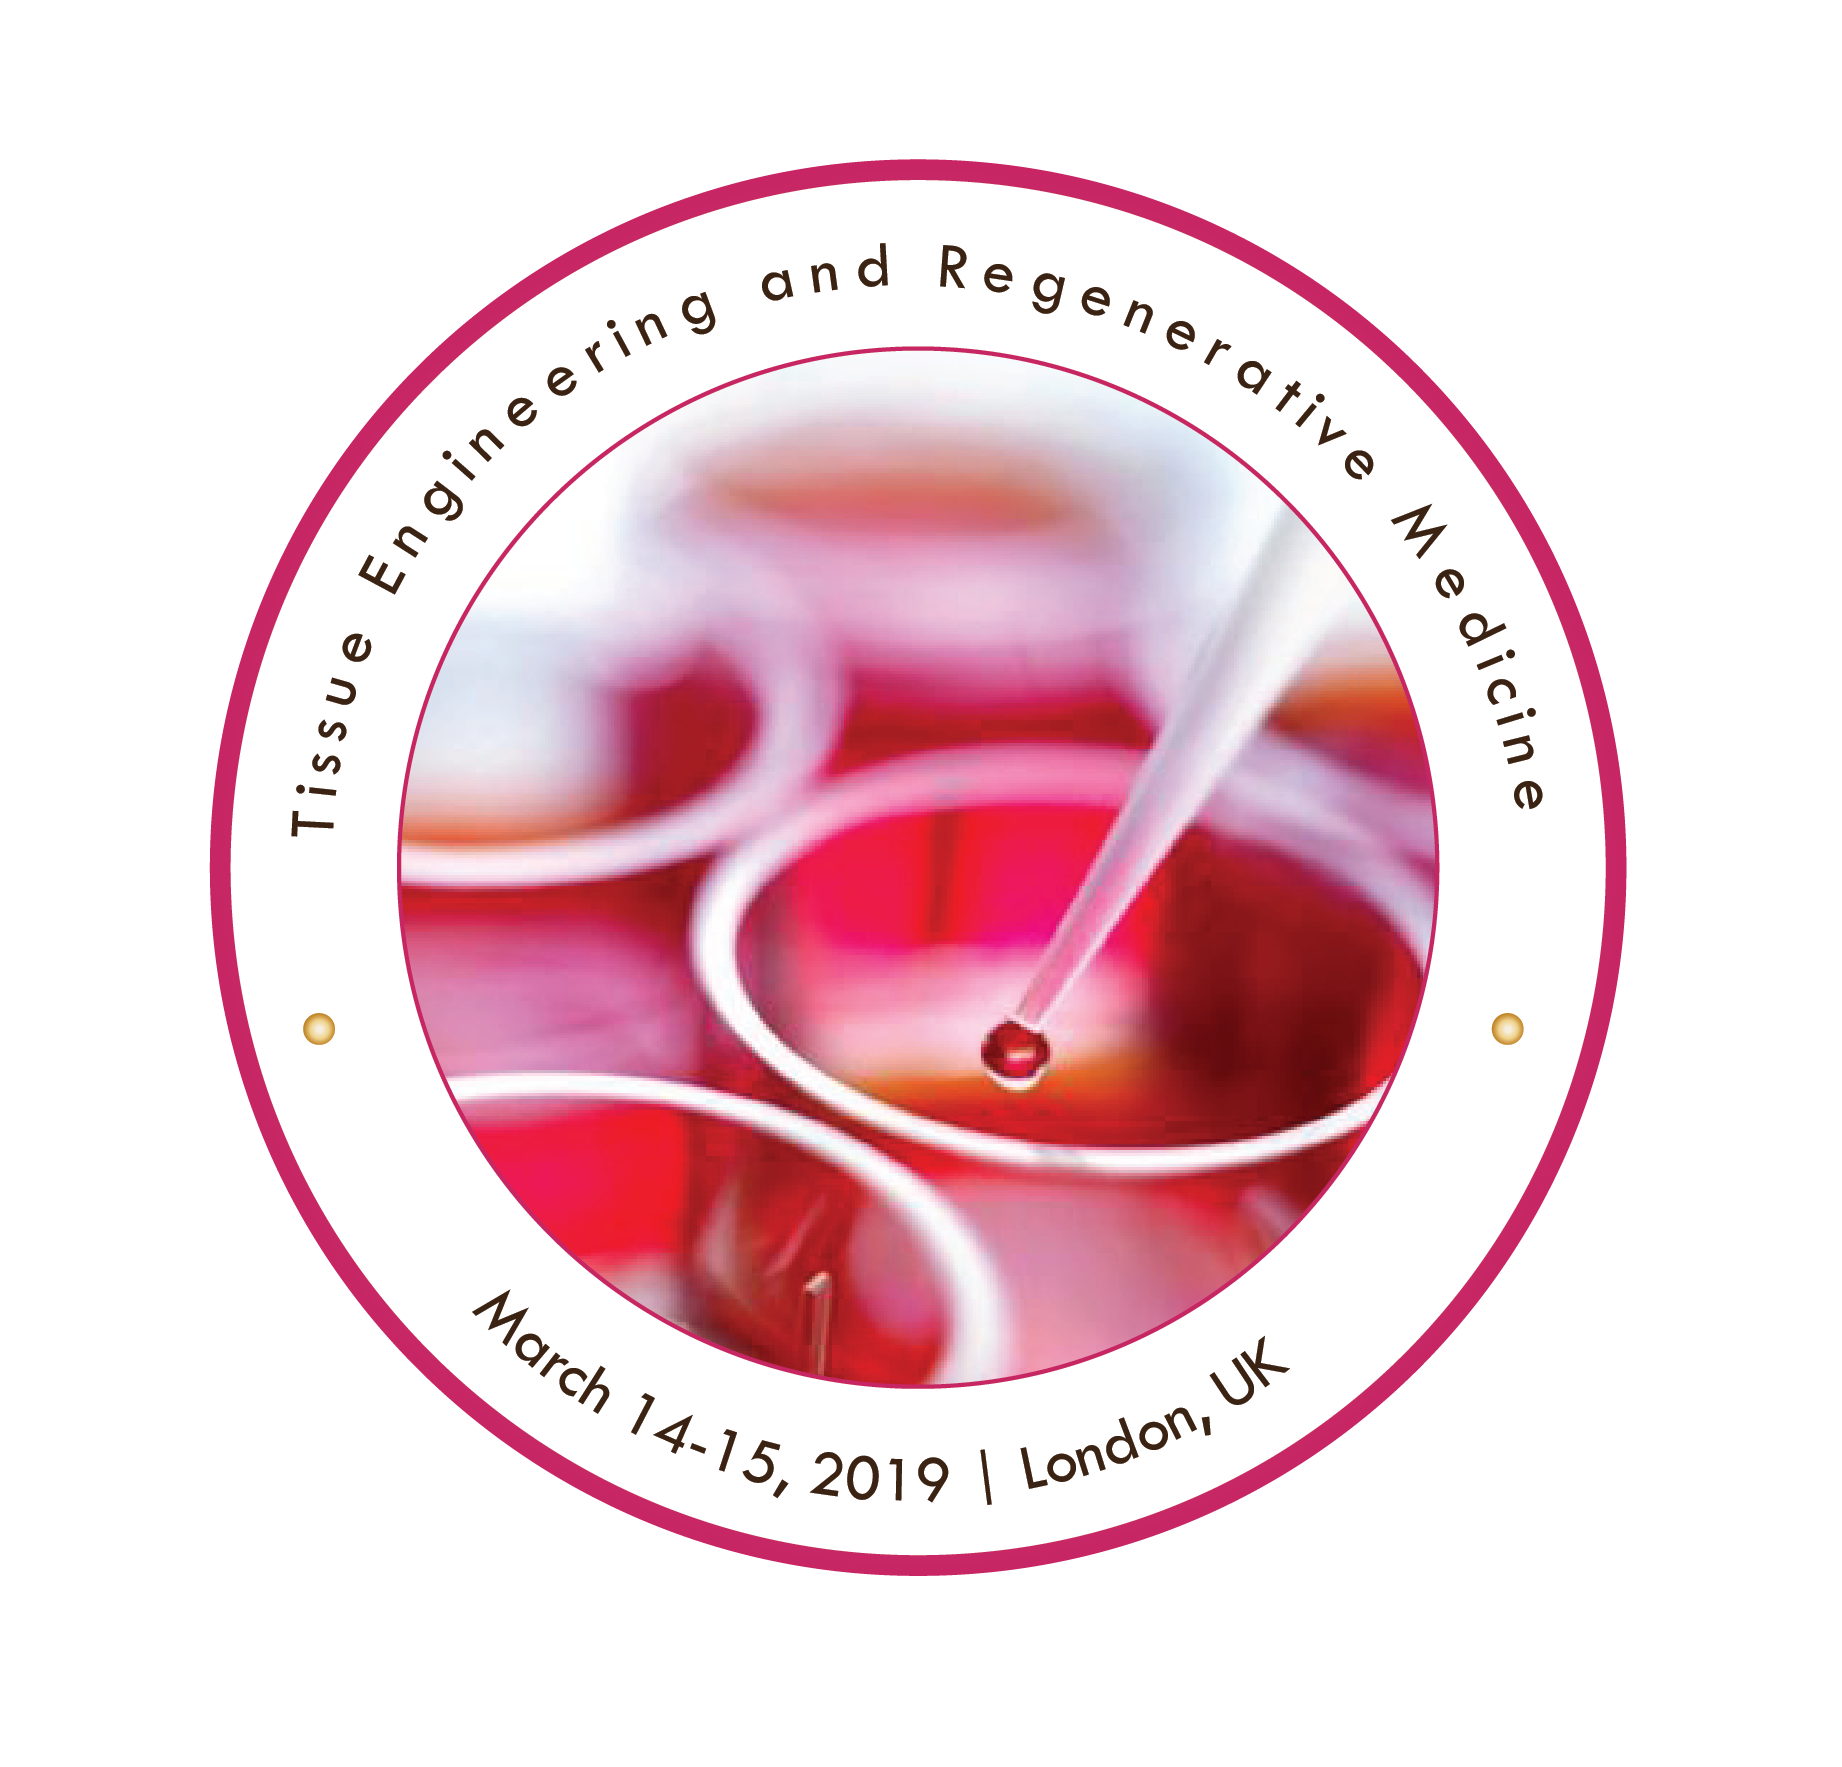 World Congress on Tissue Engineering and Regenerative Medicine